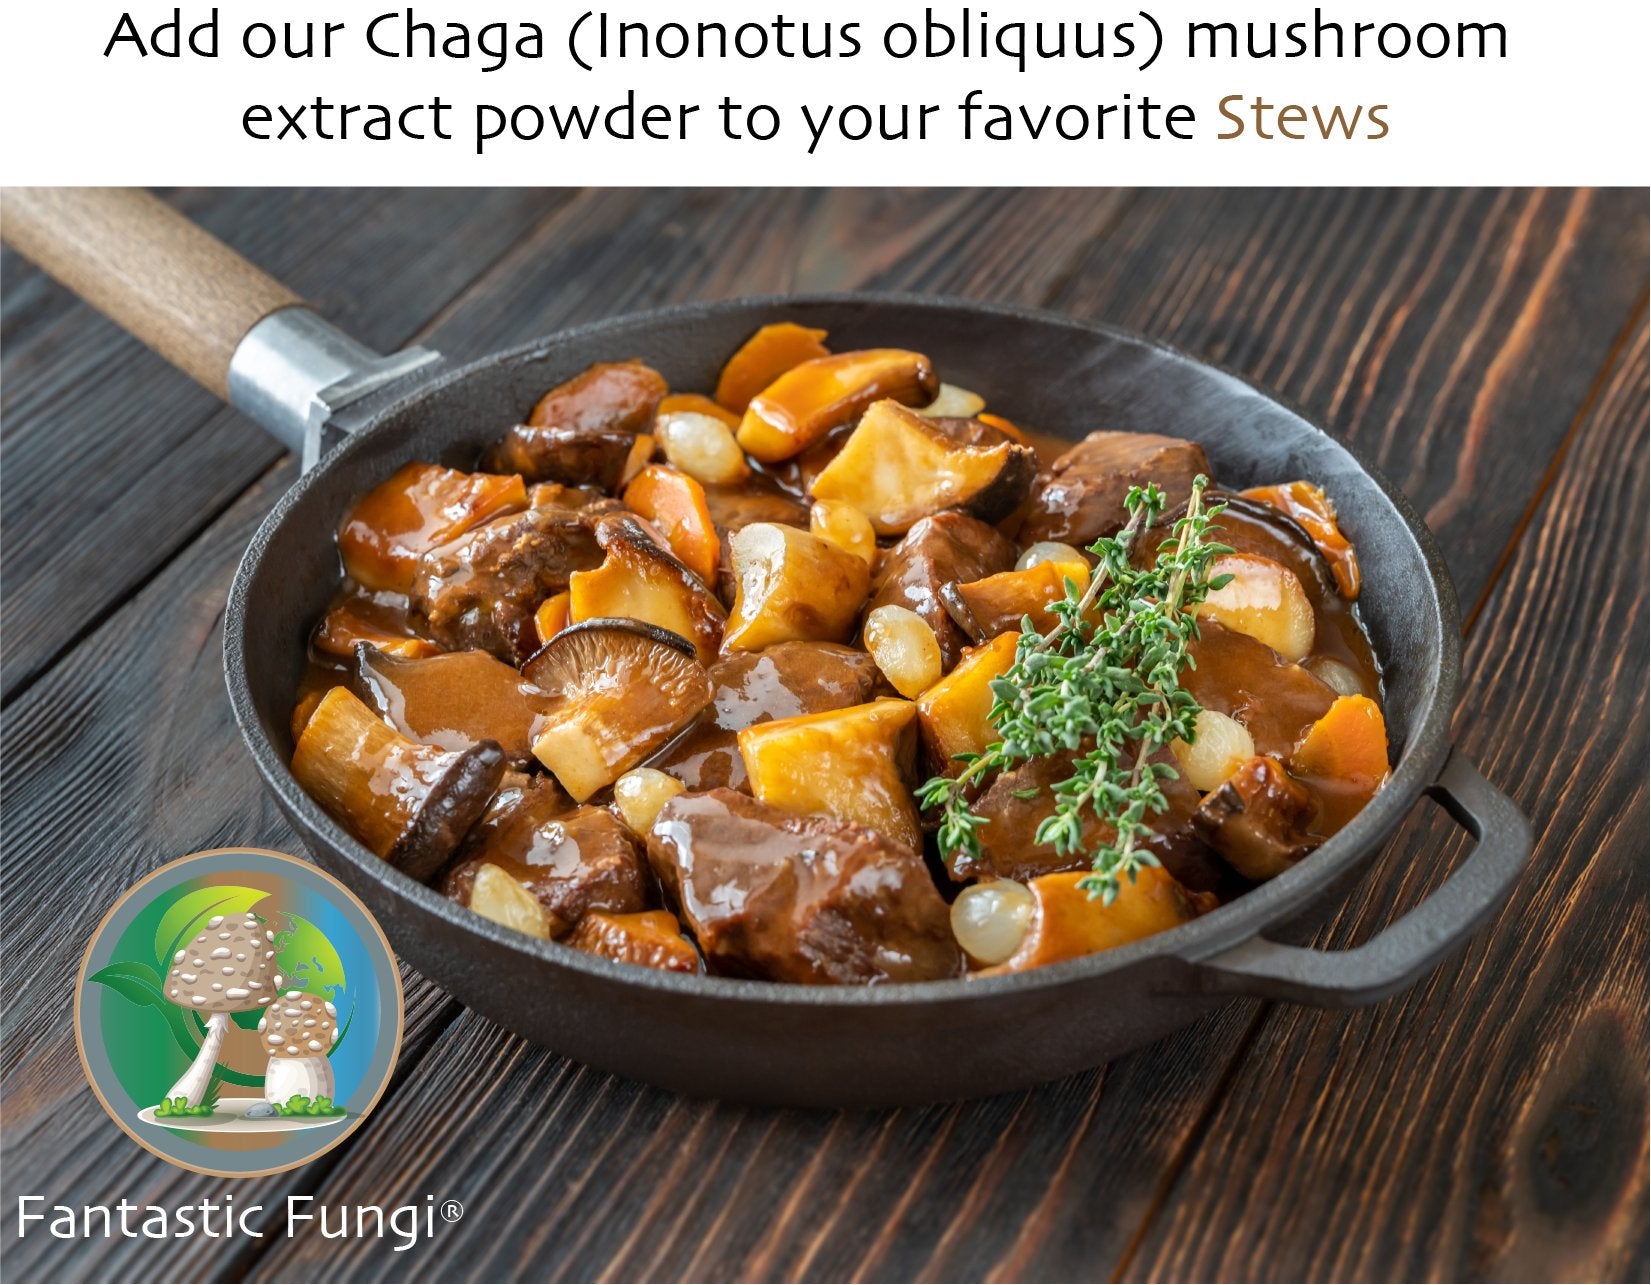 Organic Chaga (Inonotus obliquus) Mushroom extract powder / Extrait de Chaga (Inonotus obliquus) biologique en poudre - Ecogenya